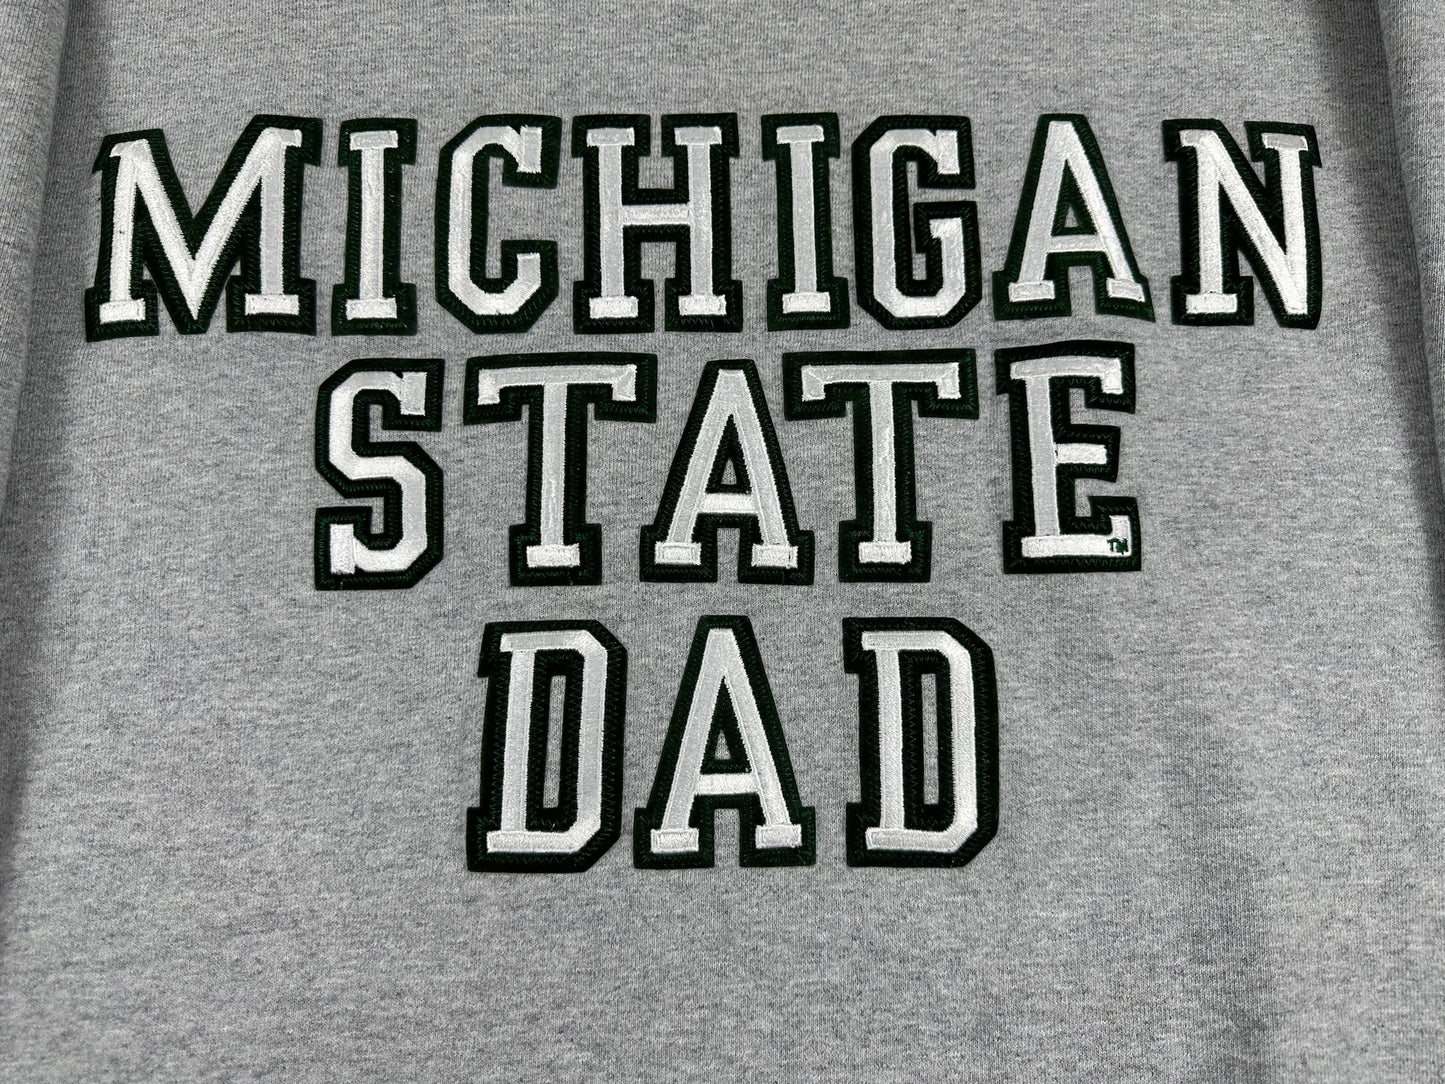 Michigan State Dad Crewneck